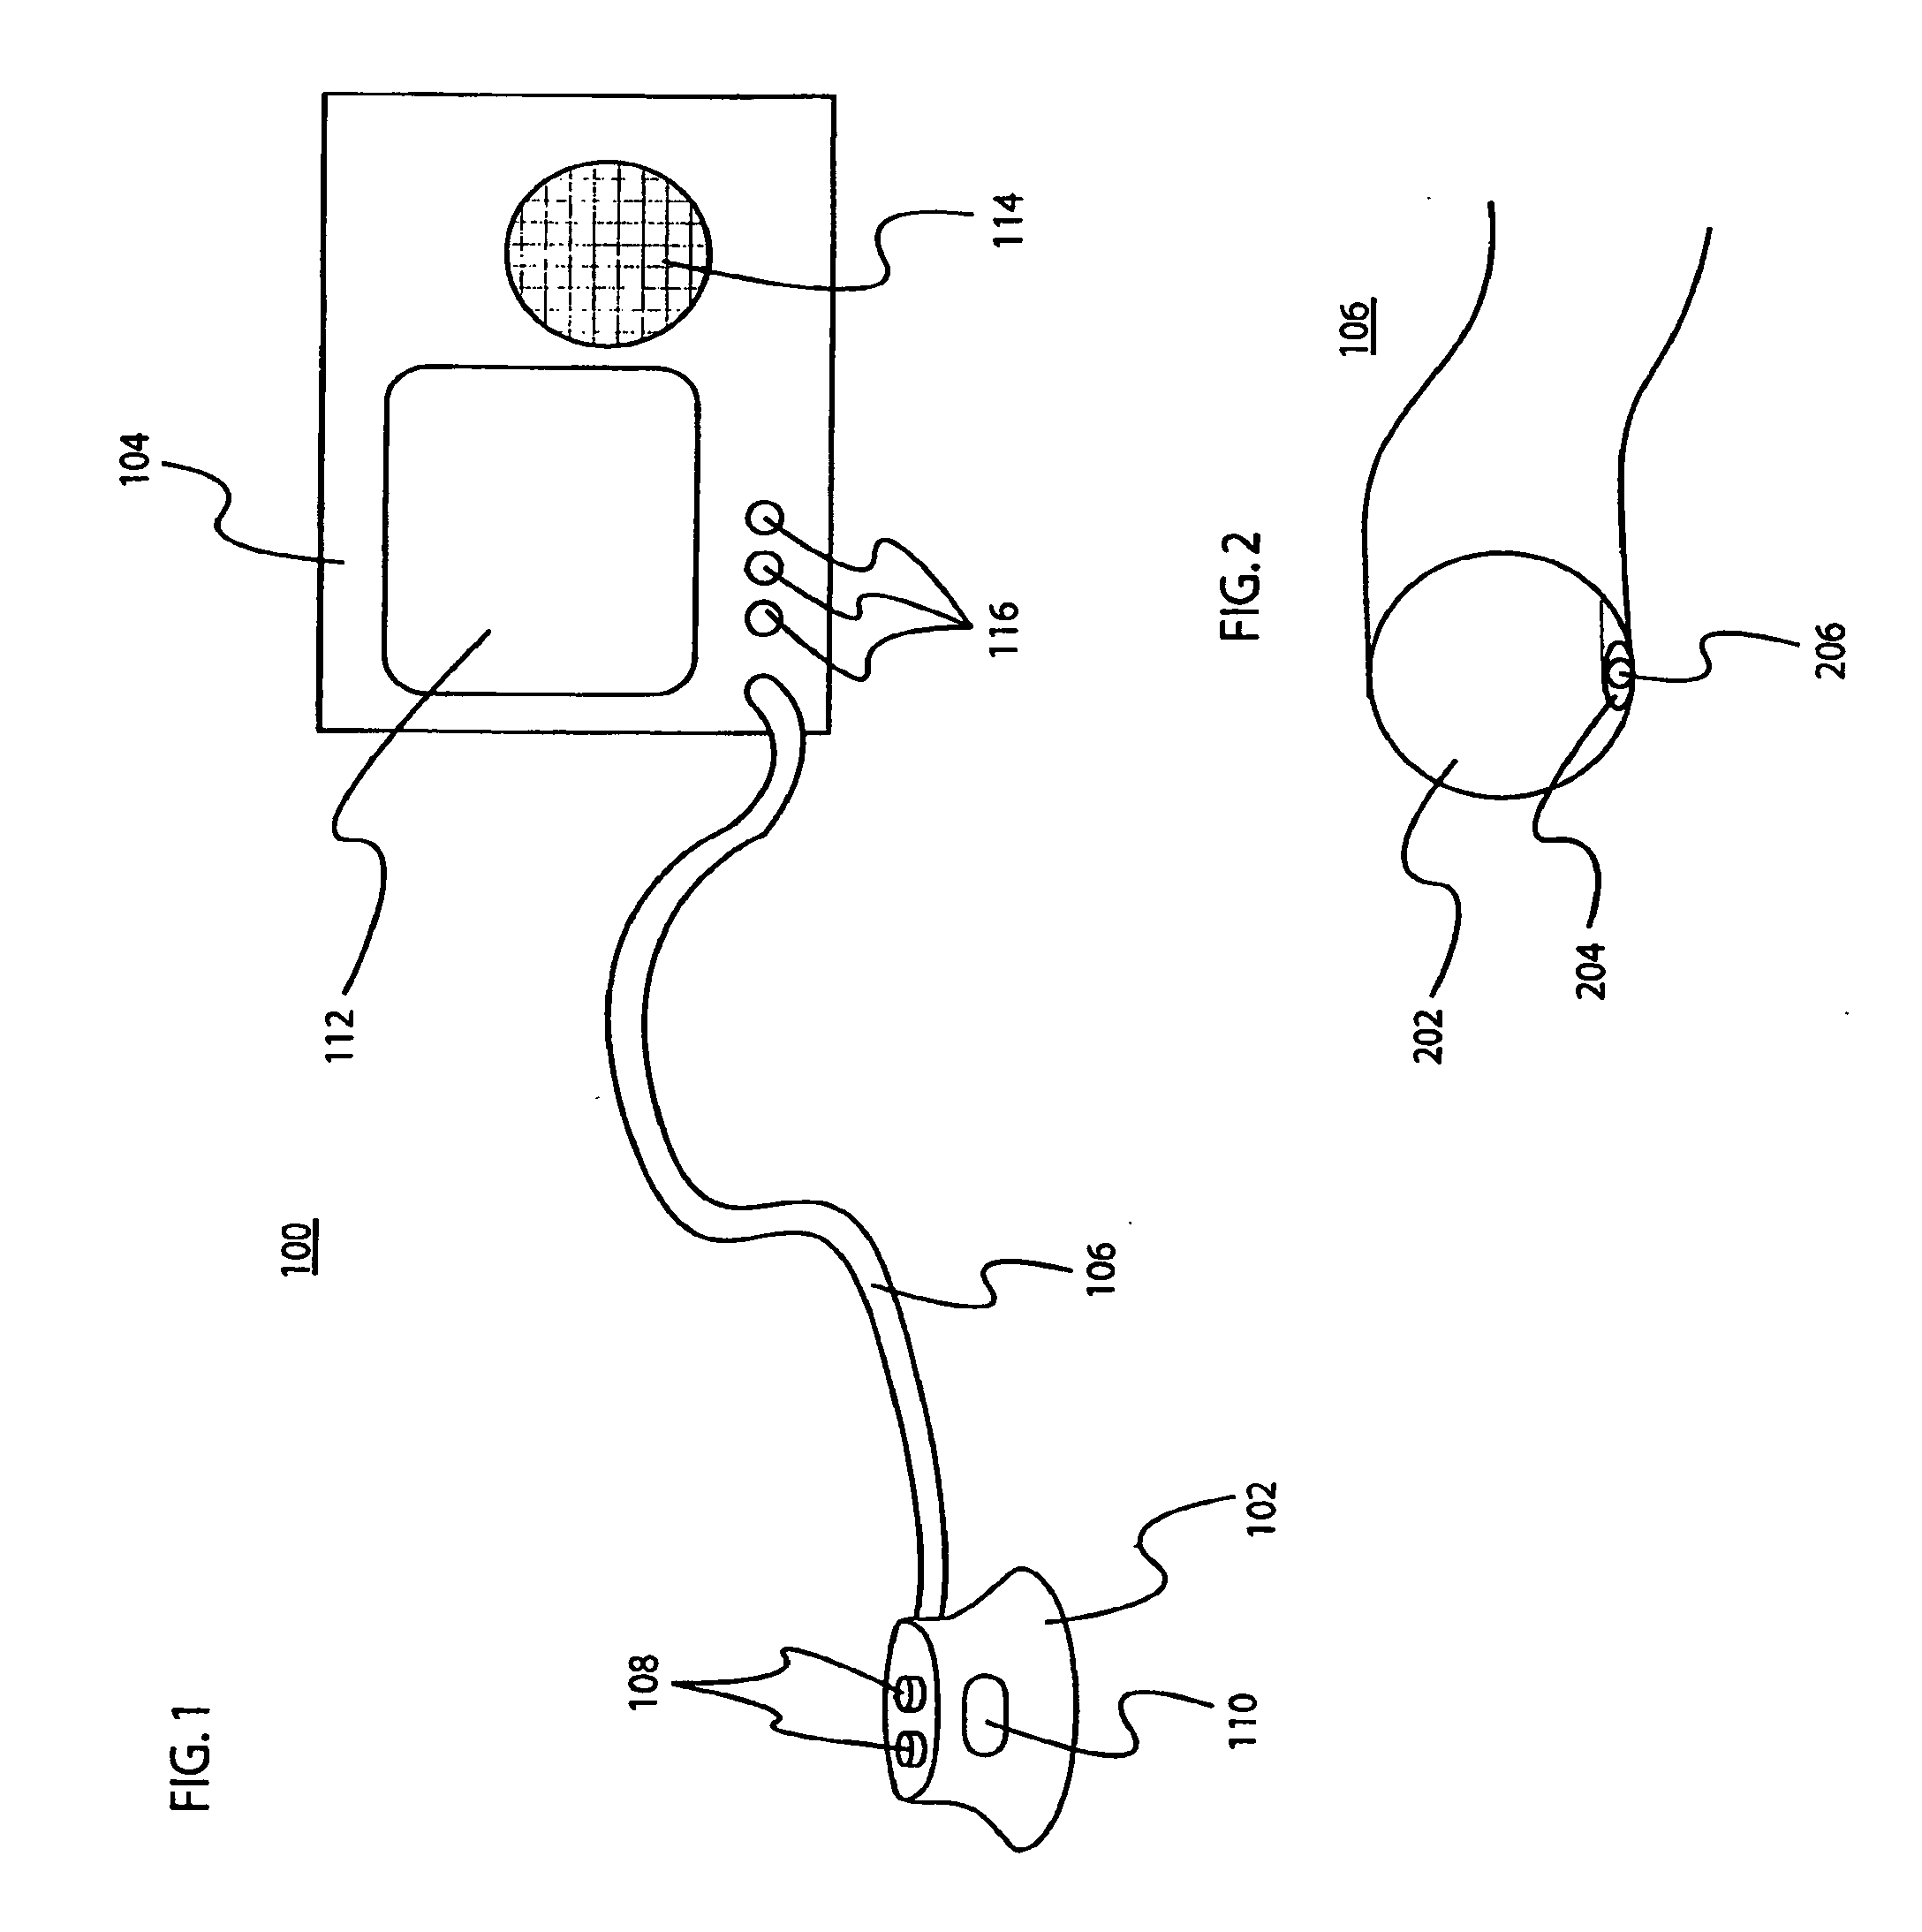 Electronic stethoscope apparatus